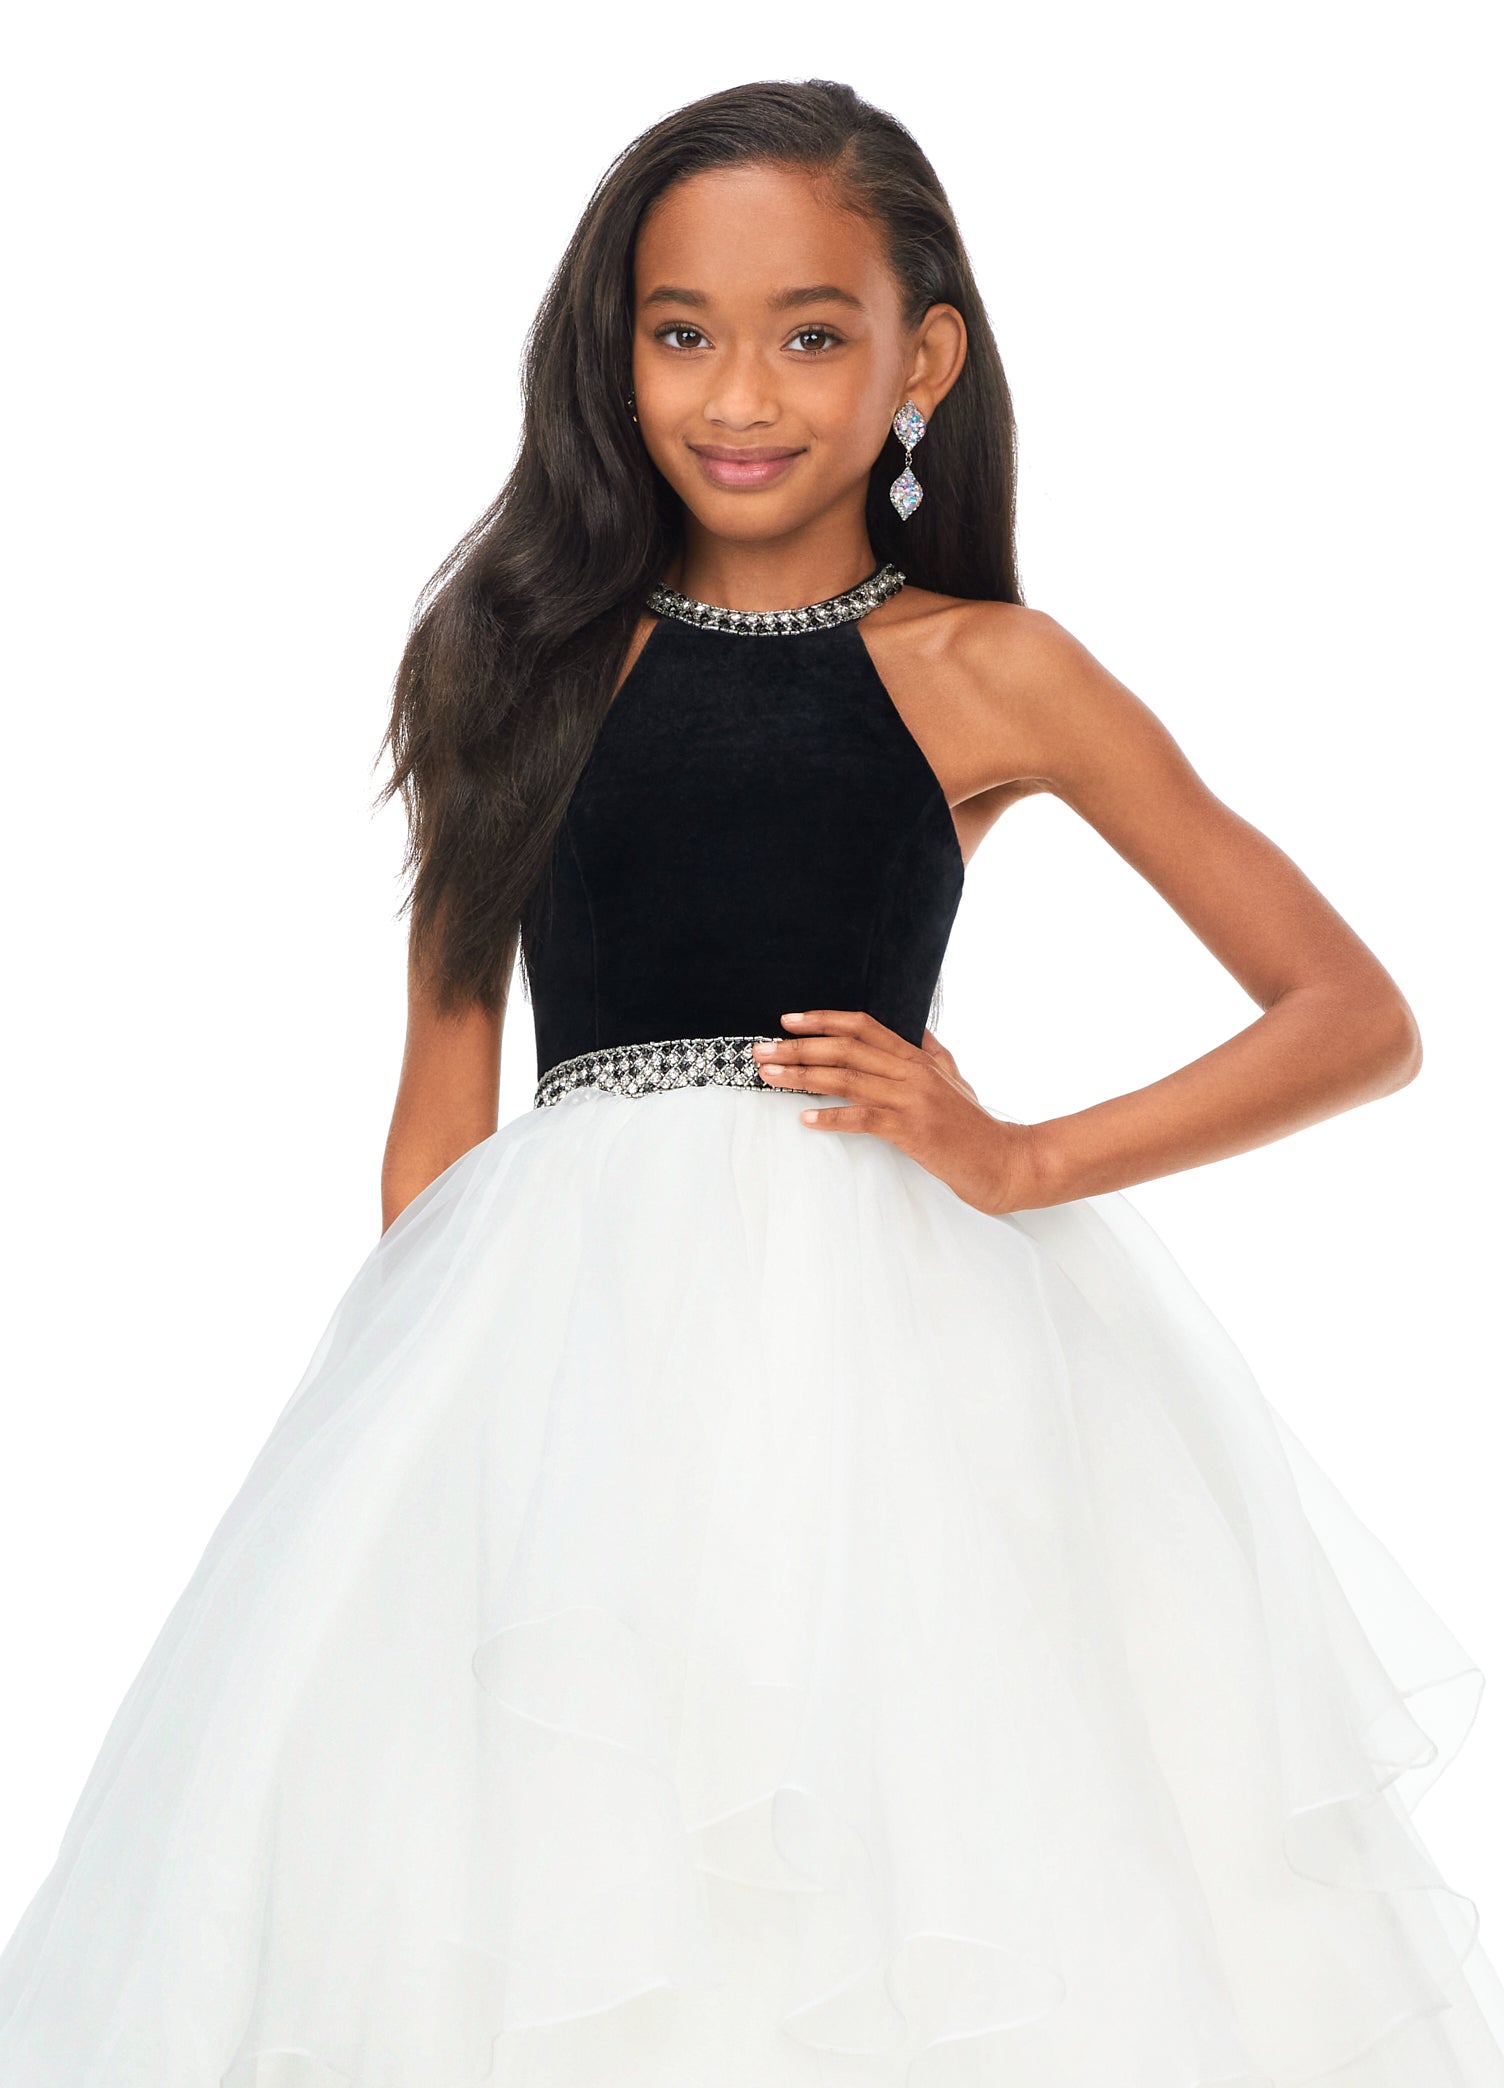 Childrens Kids Girls Elegant Formal Halter Neck Black Dress Gown | eBay